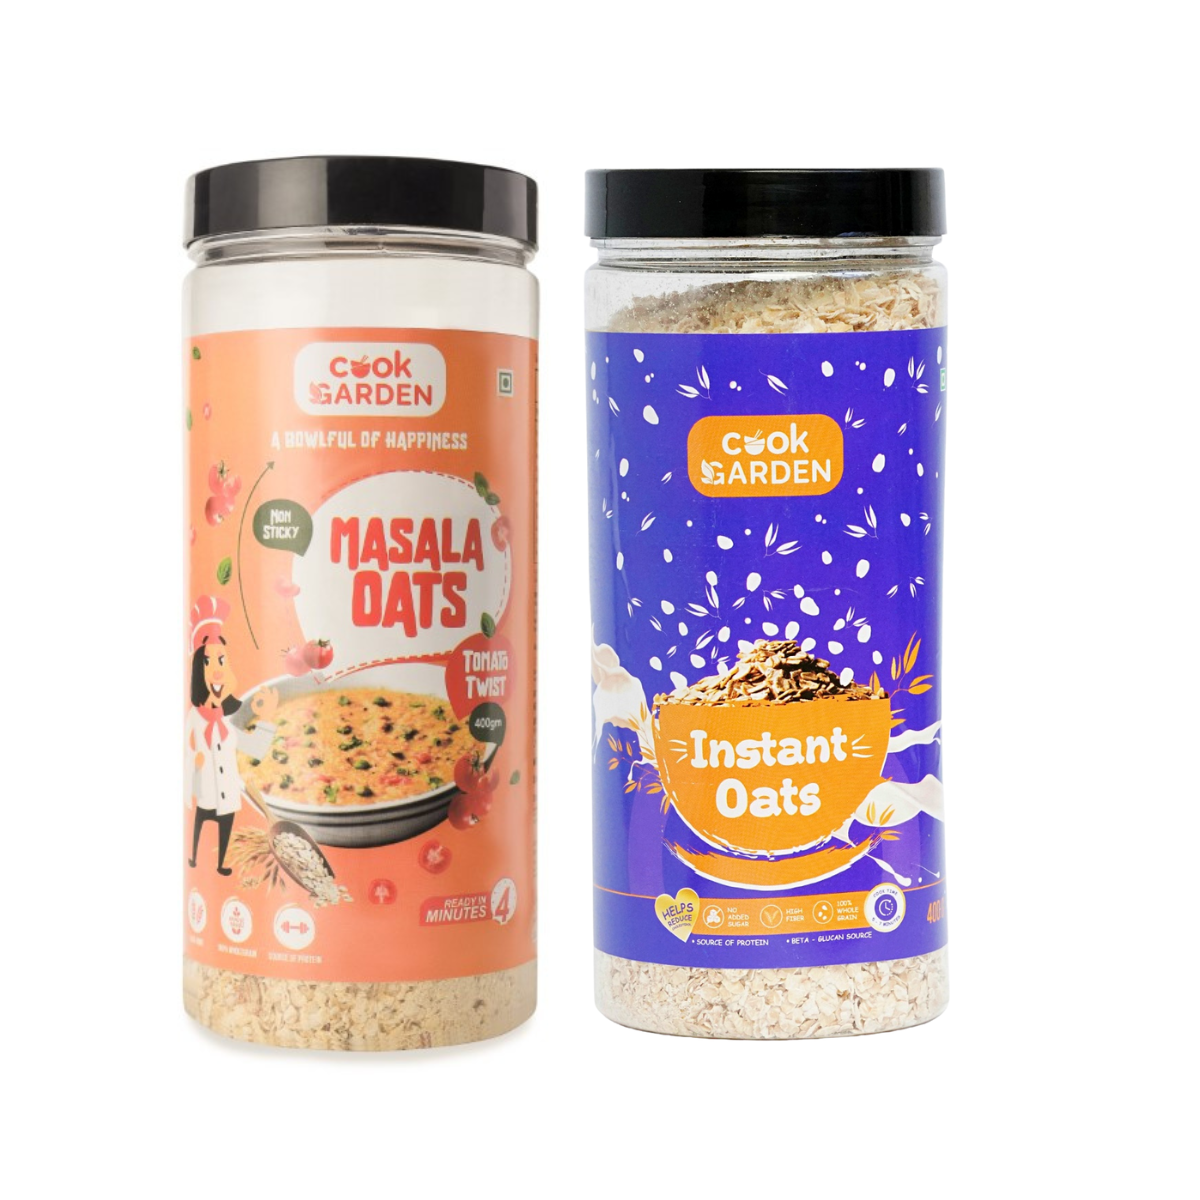 Copy of CookGarden Tomato Twist Masala Oats & Instant Oats Pack of 2 (400g each)